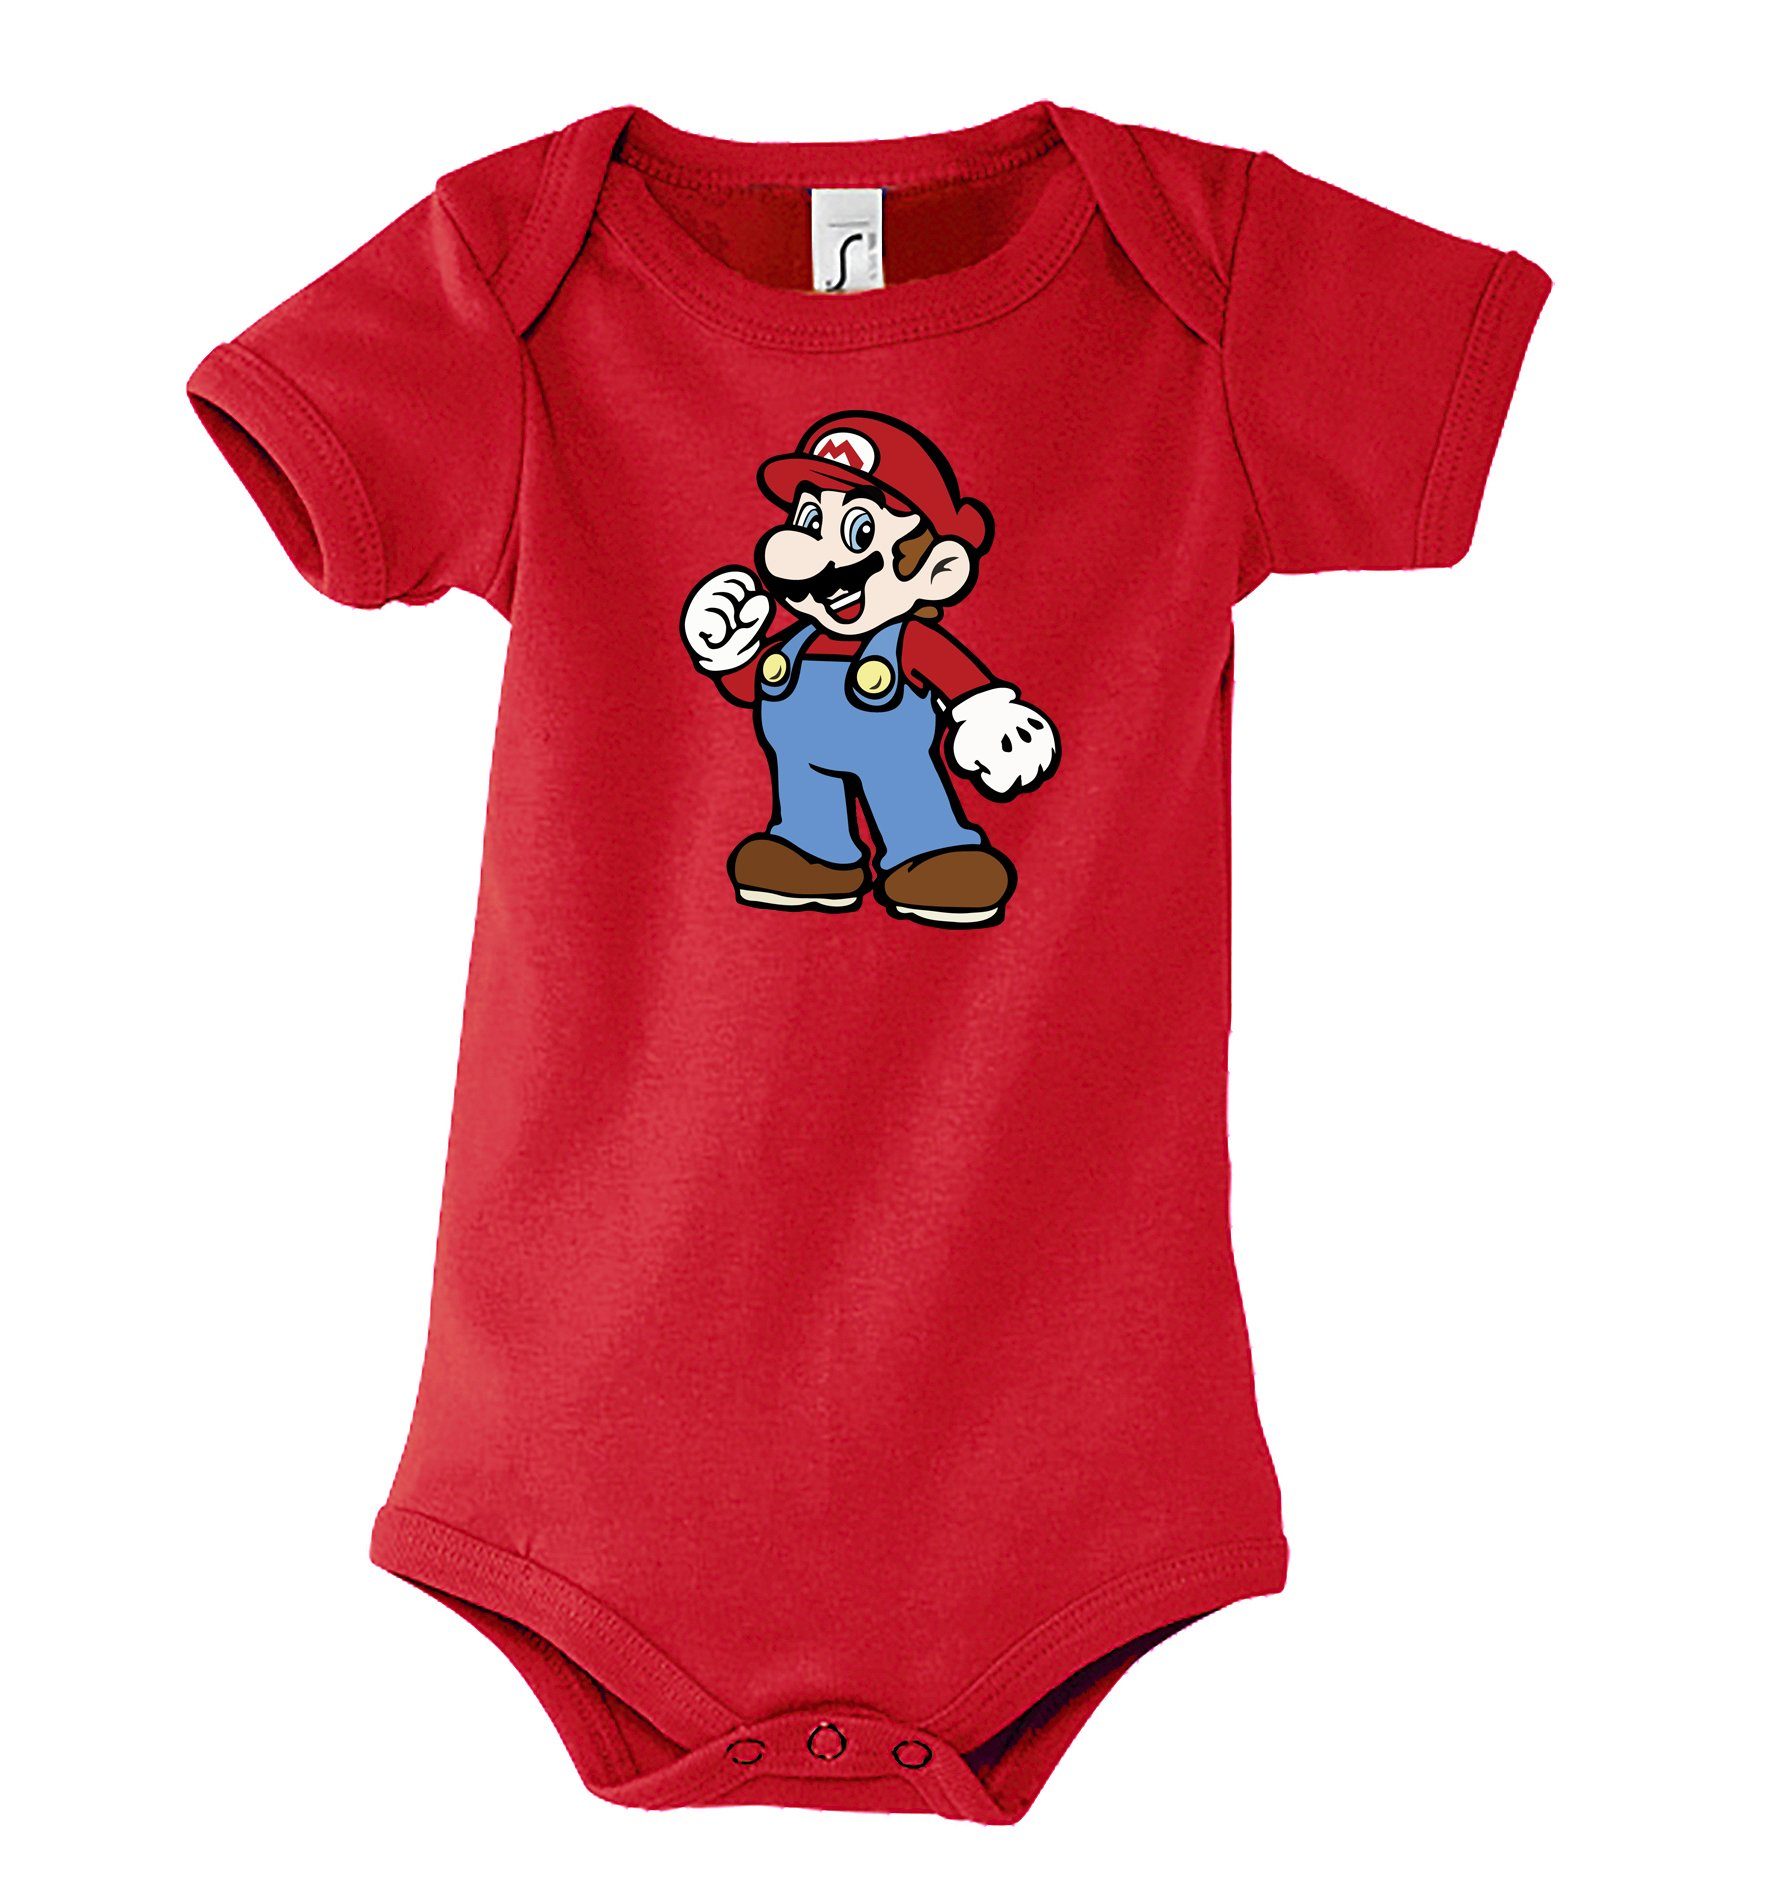 Rot Body Mario Frontprint Designz Baby Strampler Kurzarmbody mit niedlichem Youth